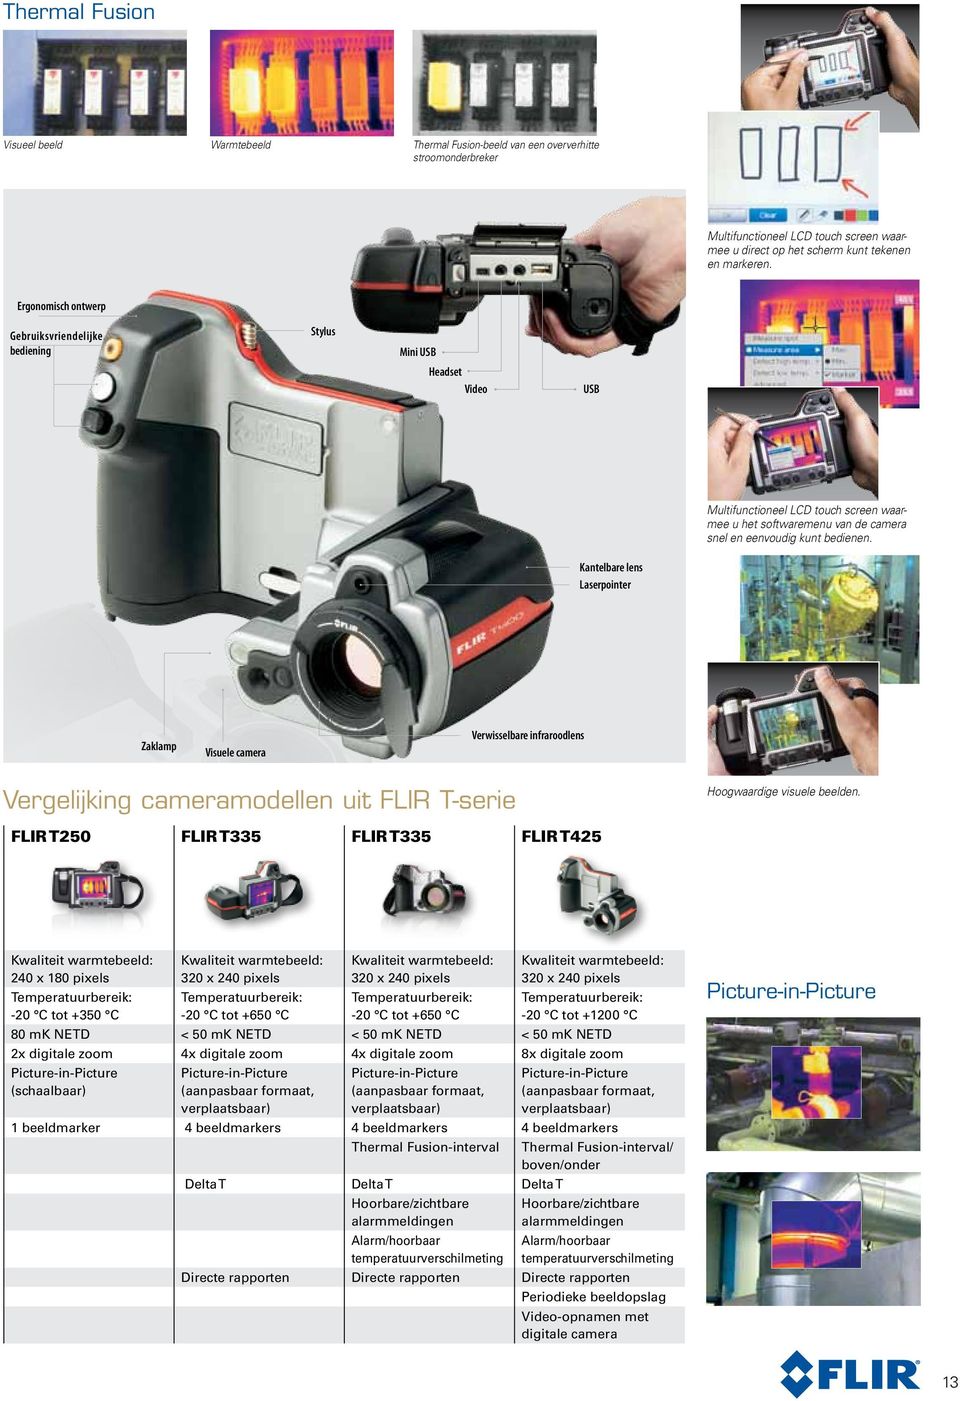 Kantelbare lens Laserpointer Zaklamp Visuele camera Verwisselbare infraroodlens Vergelijking cameramodellen uit FLIR T-serie Hoogwaardige visuele beelden.